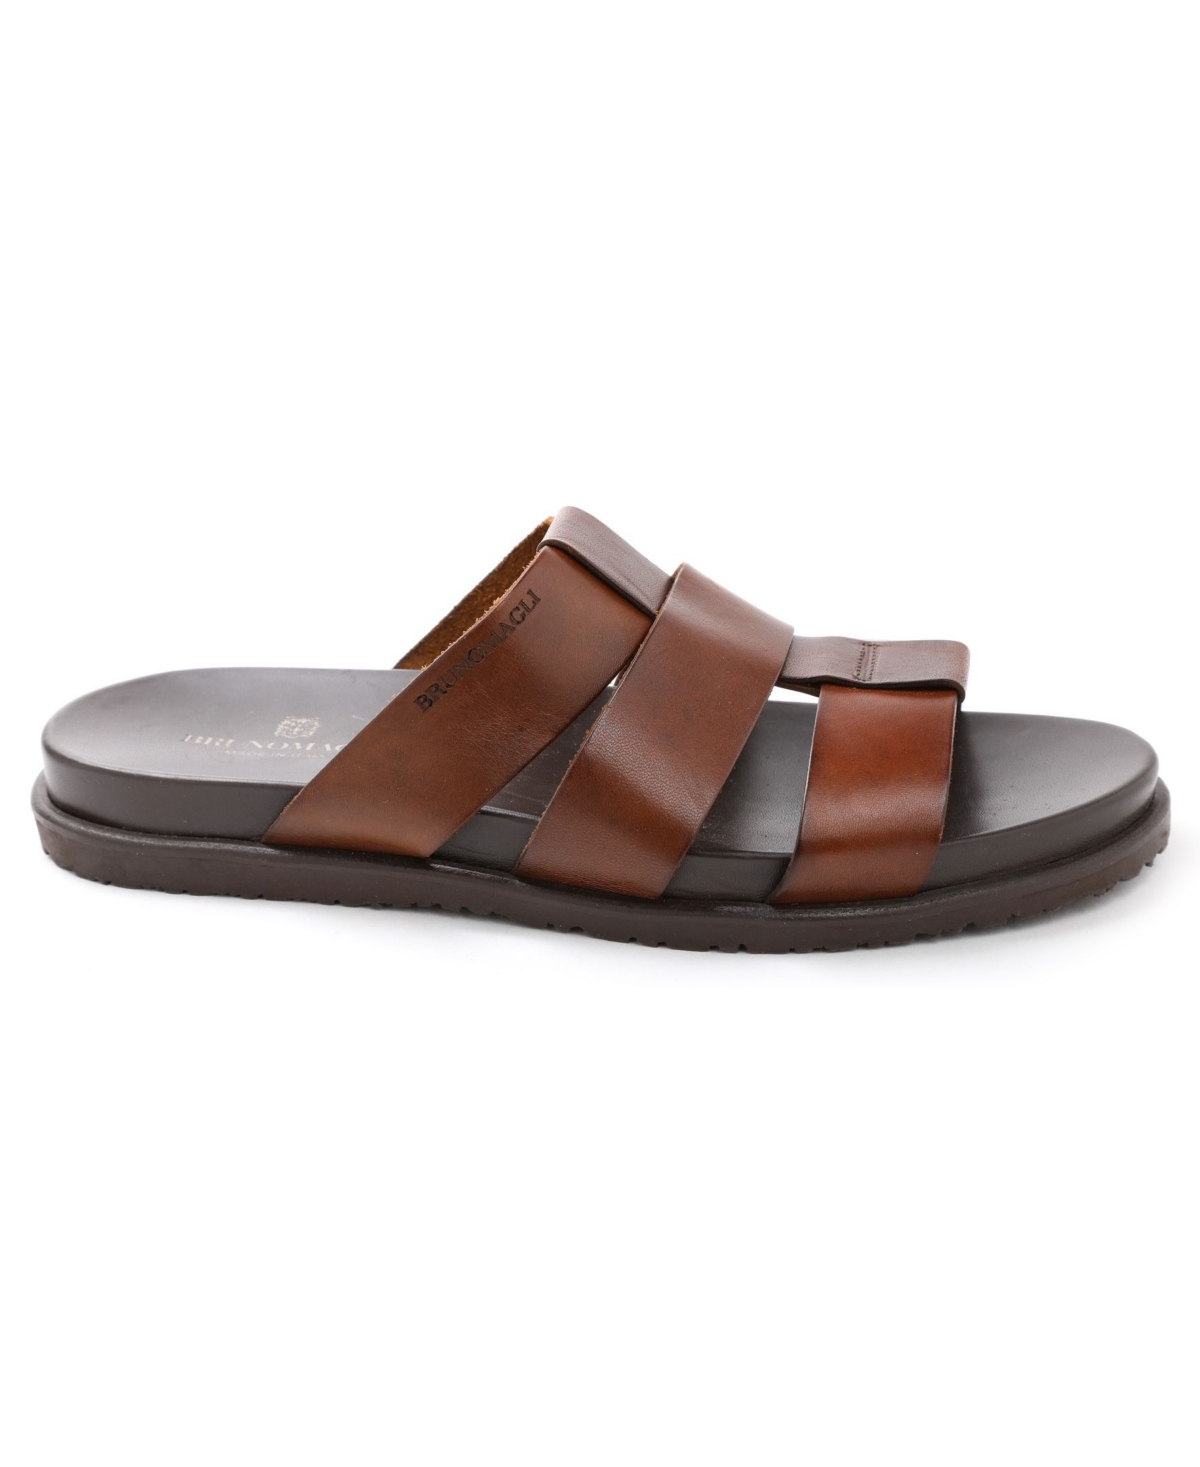 Men's Empoli Slide Sandal - Dark Brown Leather